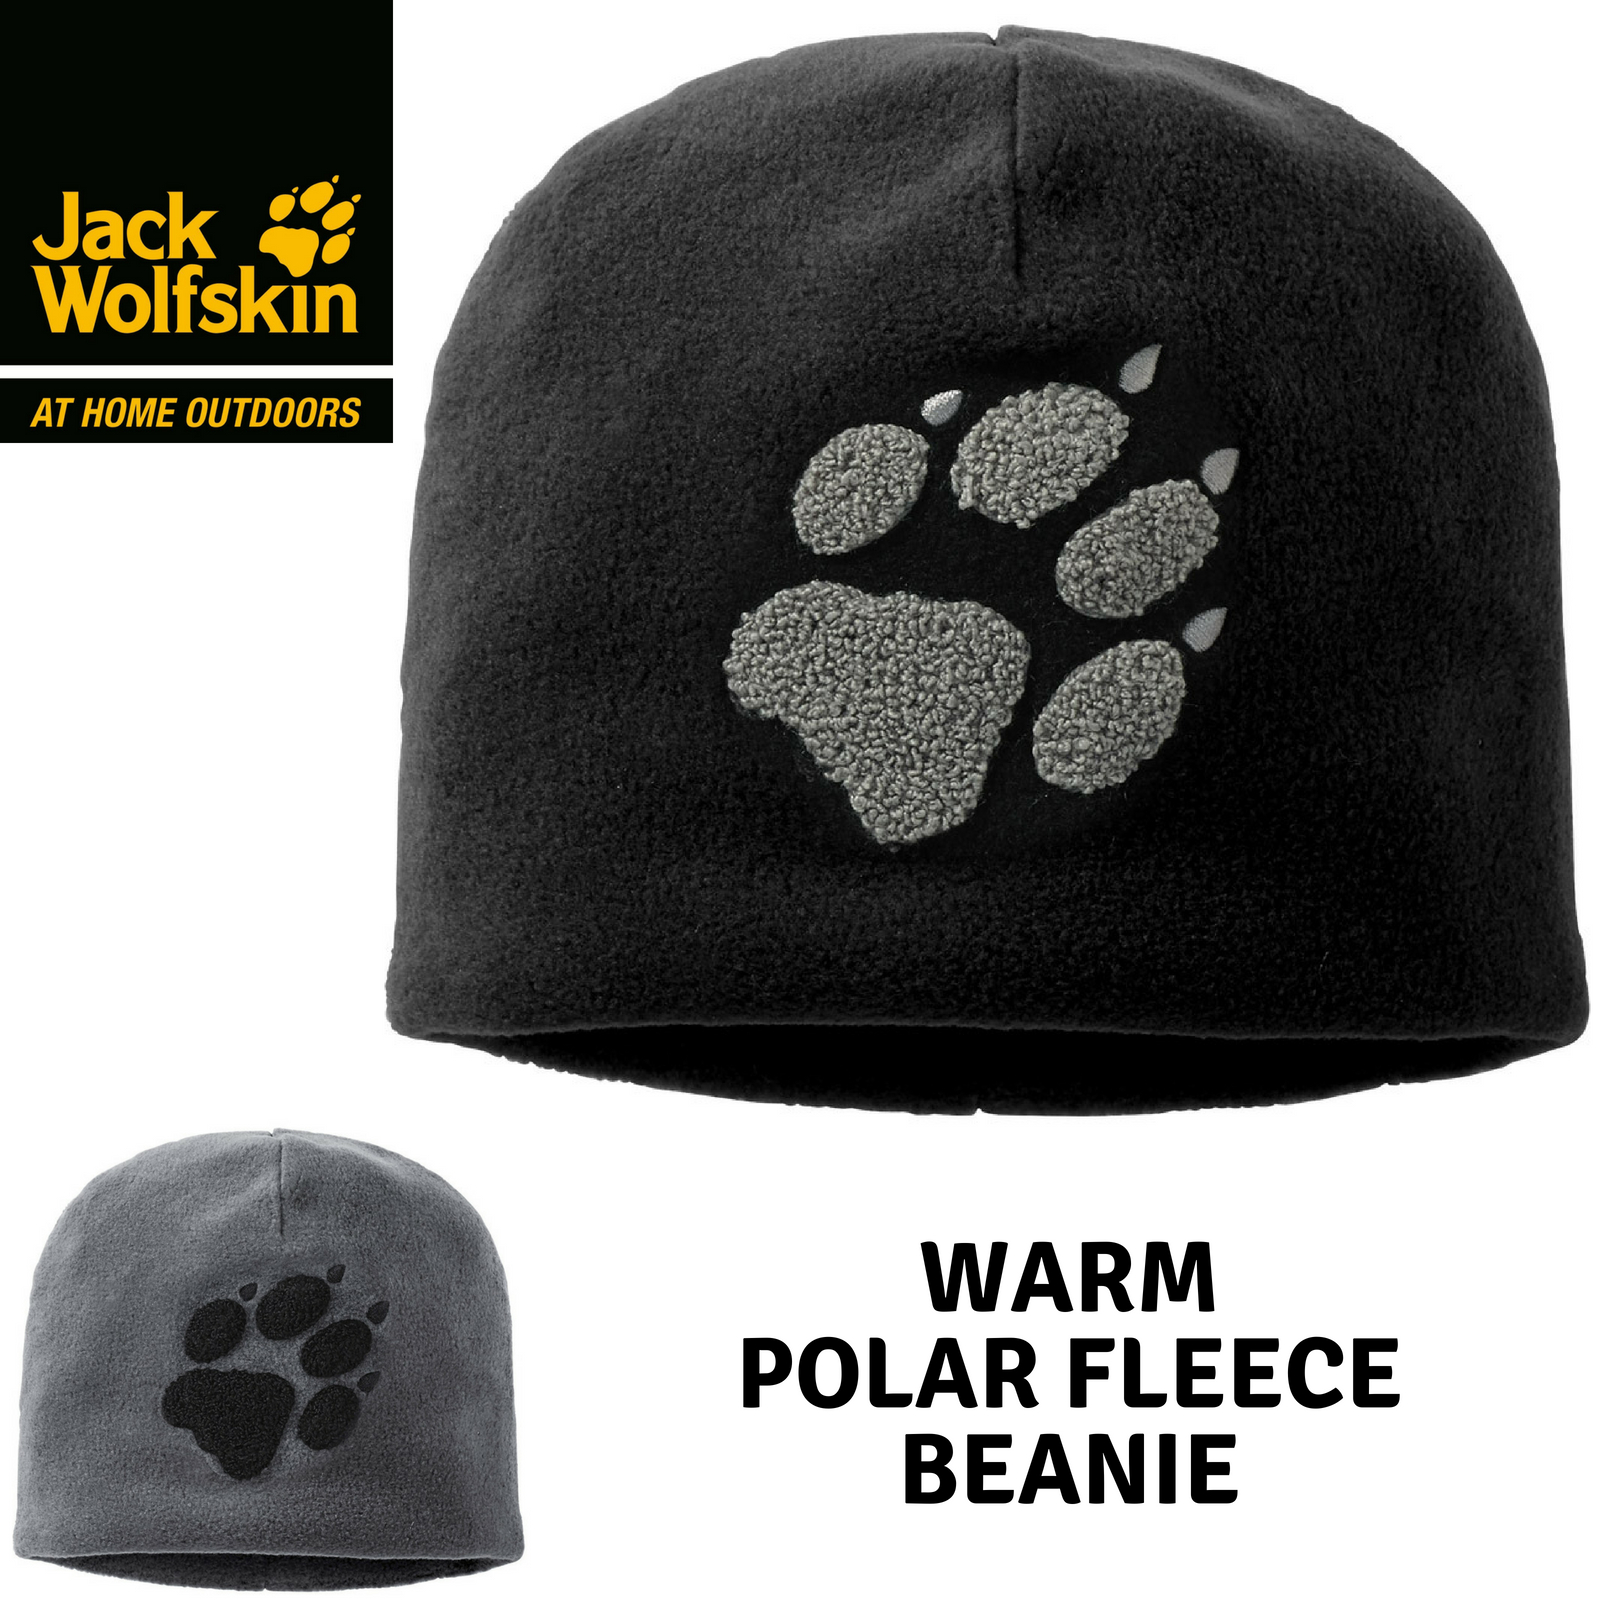 Lærd væsentligt abstraktion Jack,Wolfskin Paw Polar Fleece Thermal Beanie Hat Warm Winter Hat Hiking